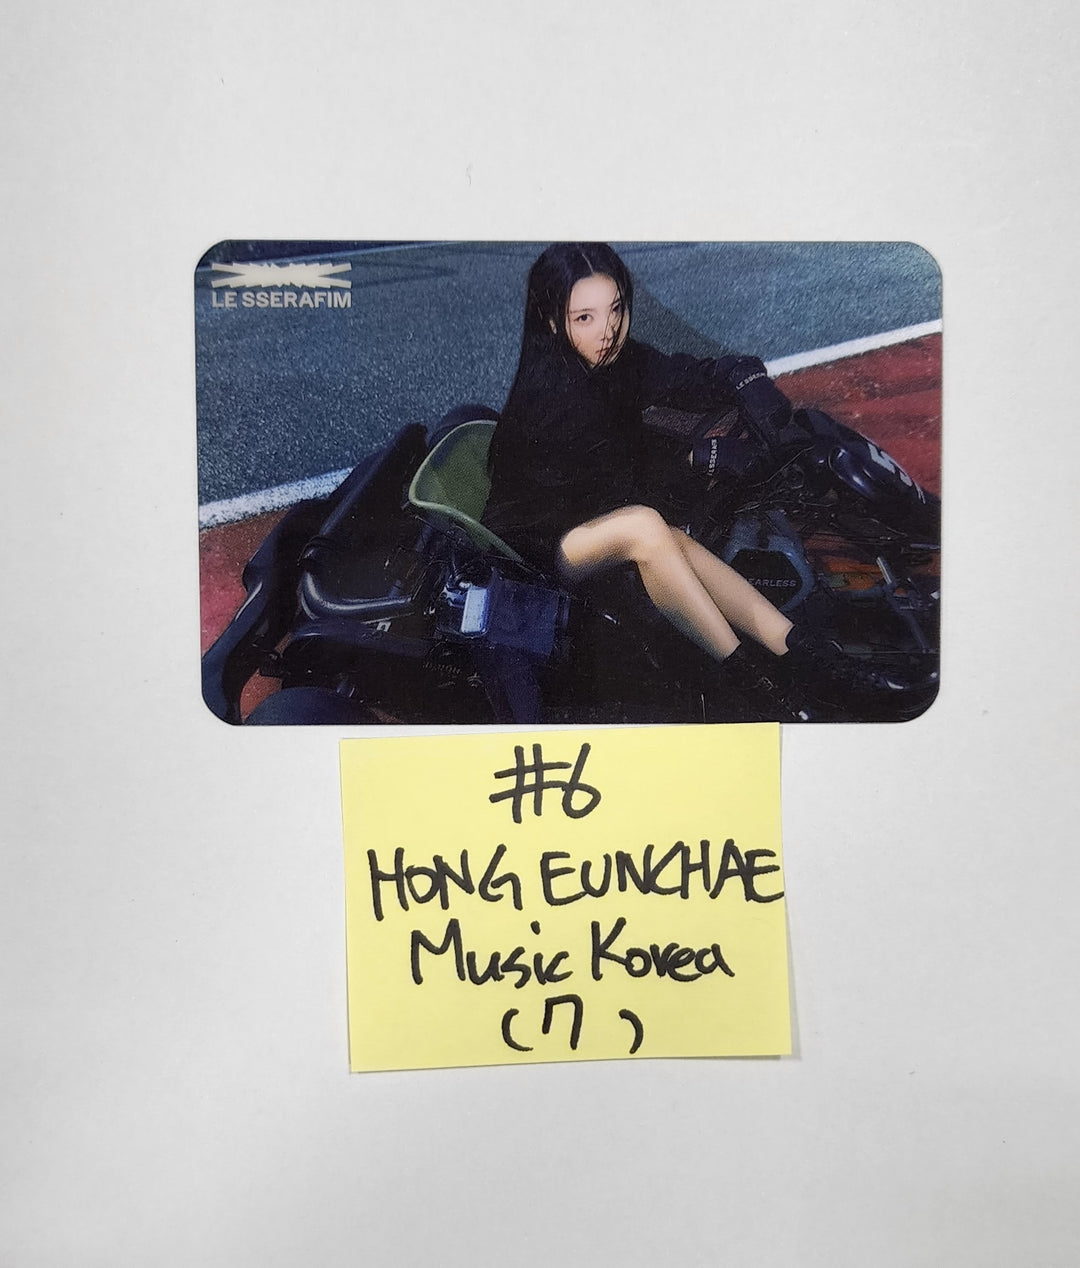 LE SSERAFIM "FEARLESS" - Music Korea Pre-Order Benefit PVC Transparent Photocard